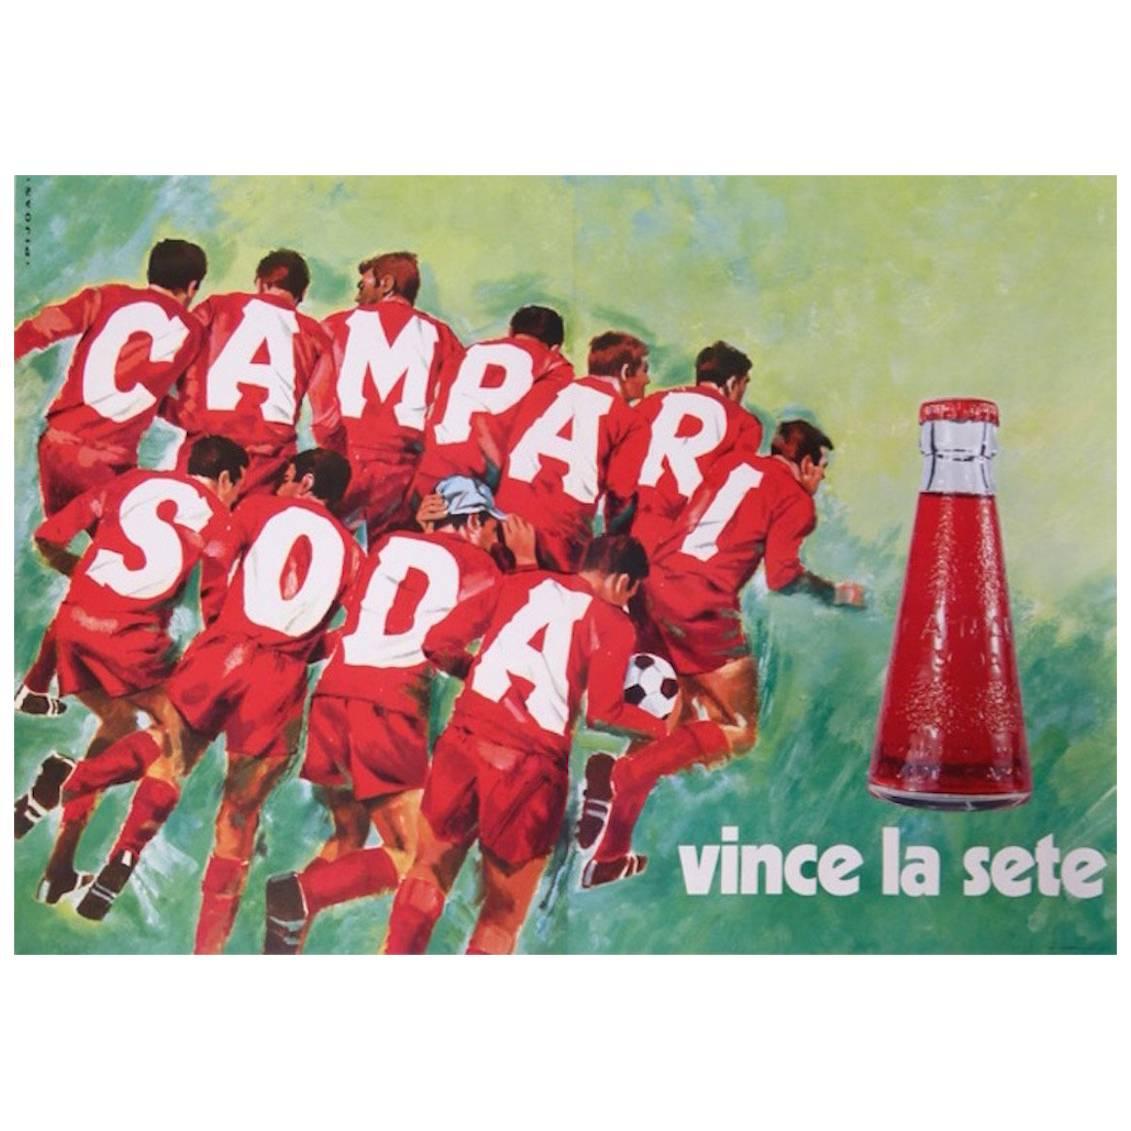 Original Vintage-Poster, „Campari Soda“, Vince La Sete, Fußball, Pijoan